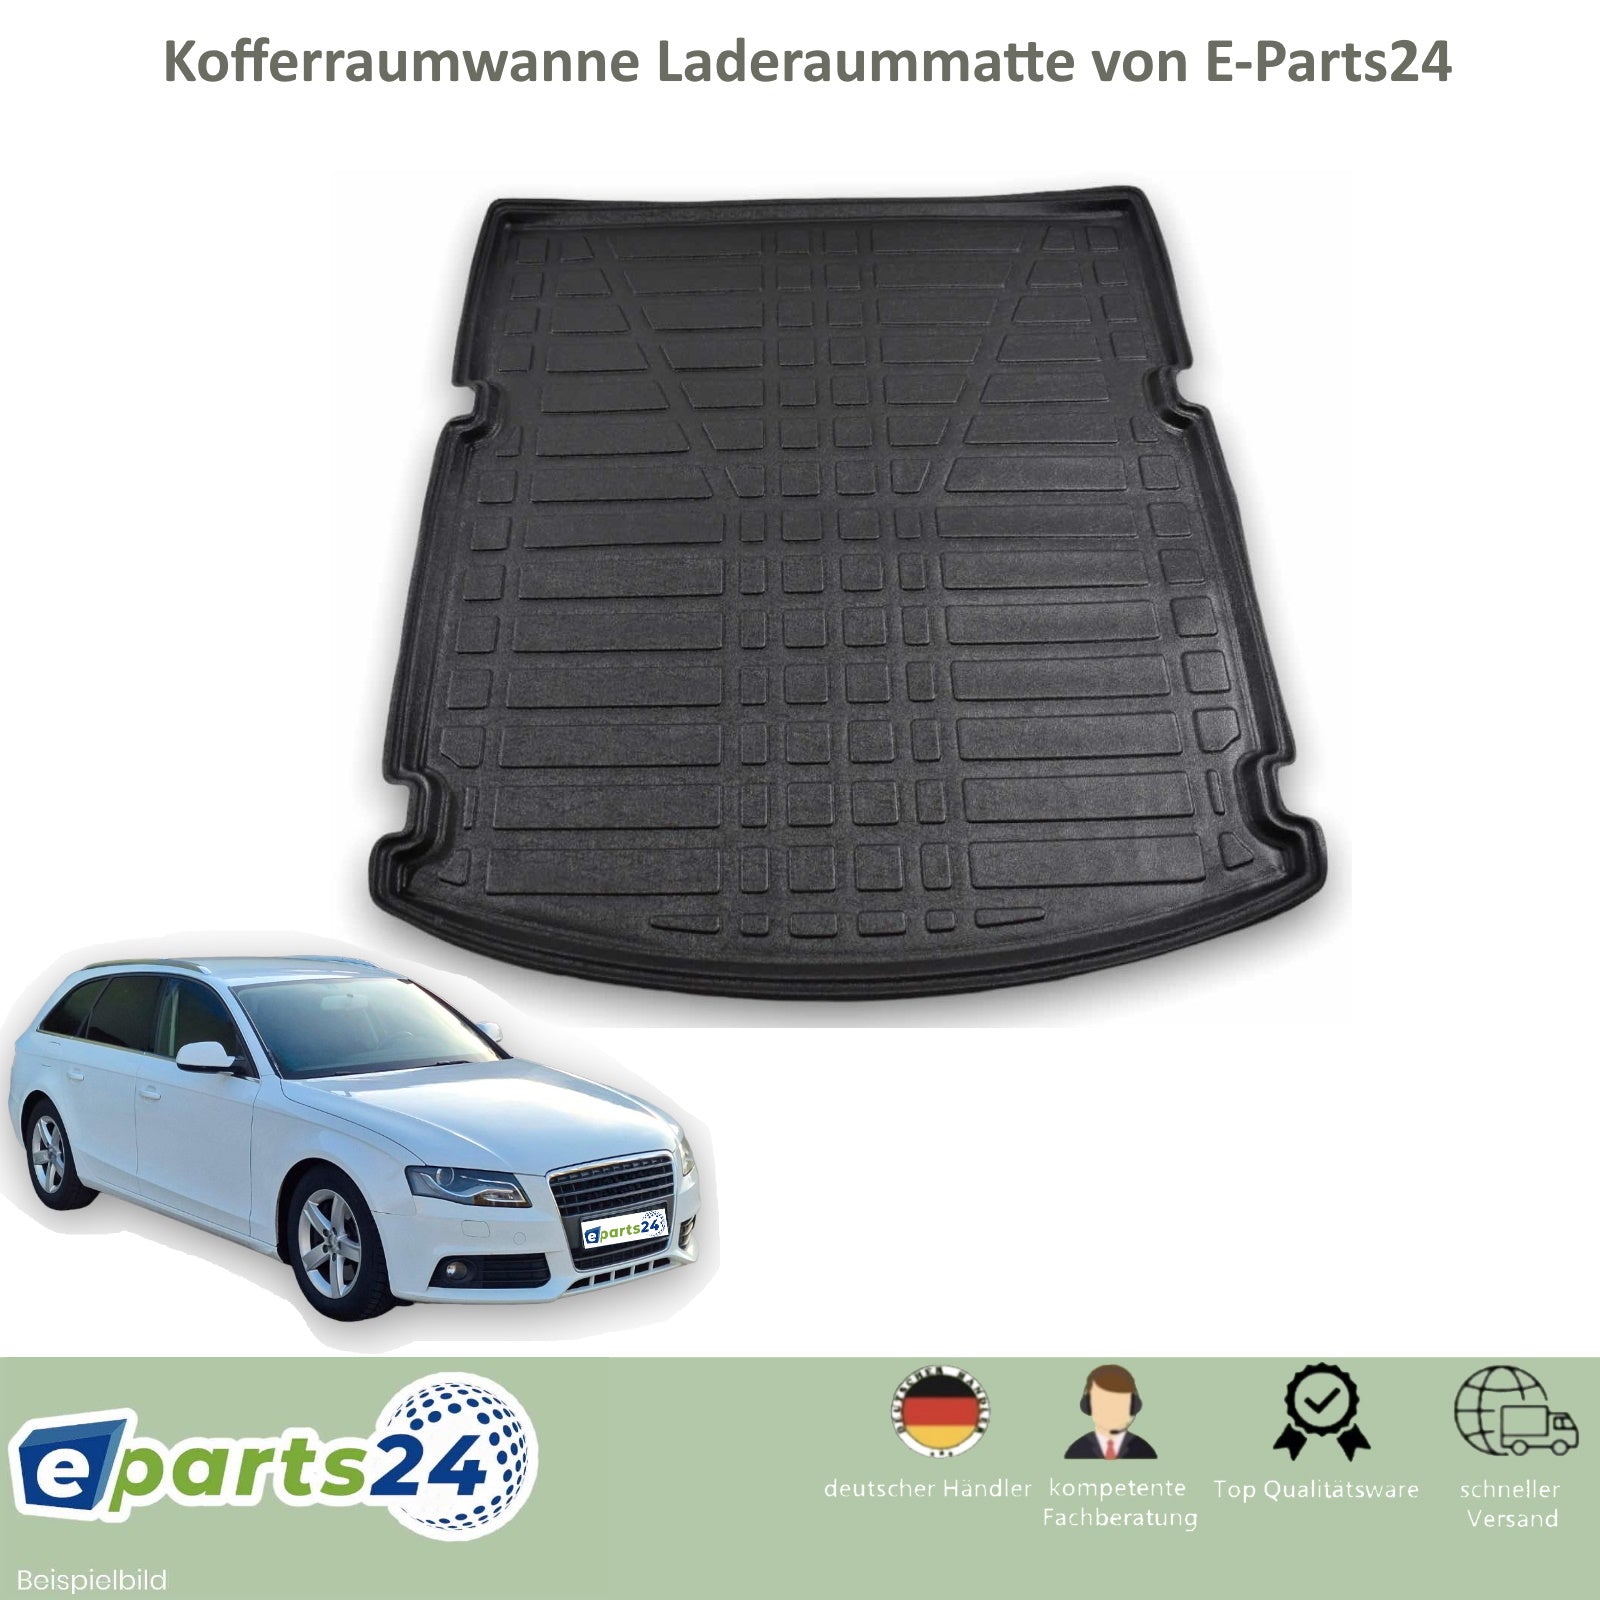 Kofferraumwanne Kofferraummatte Laderaumwanne für Audi Avant E-Parts24 B8 – 200 A4